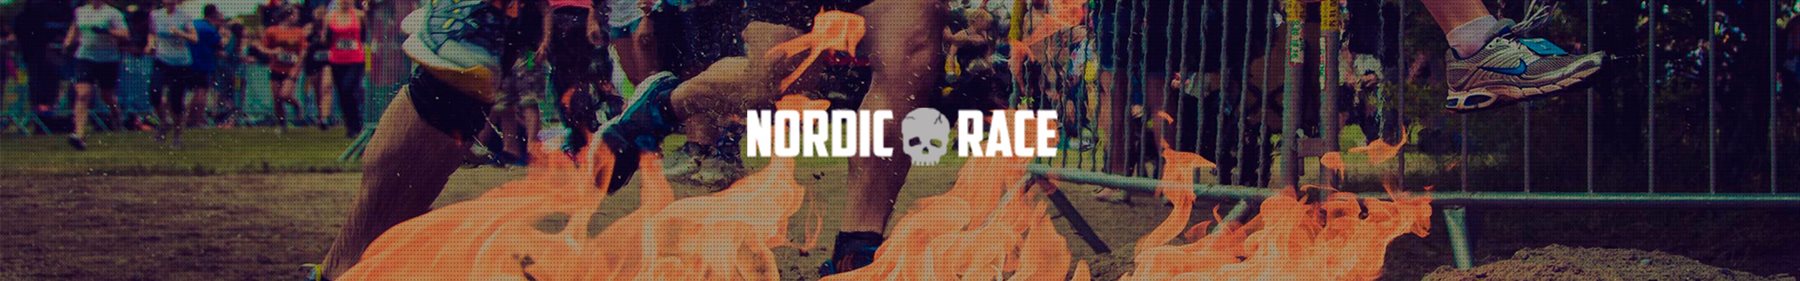 Nordic Race Hasle Bakker 2016